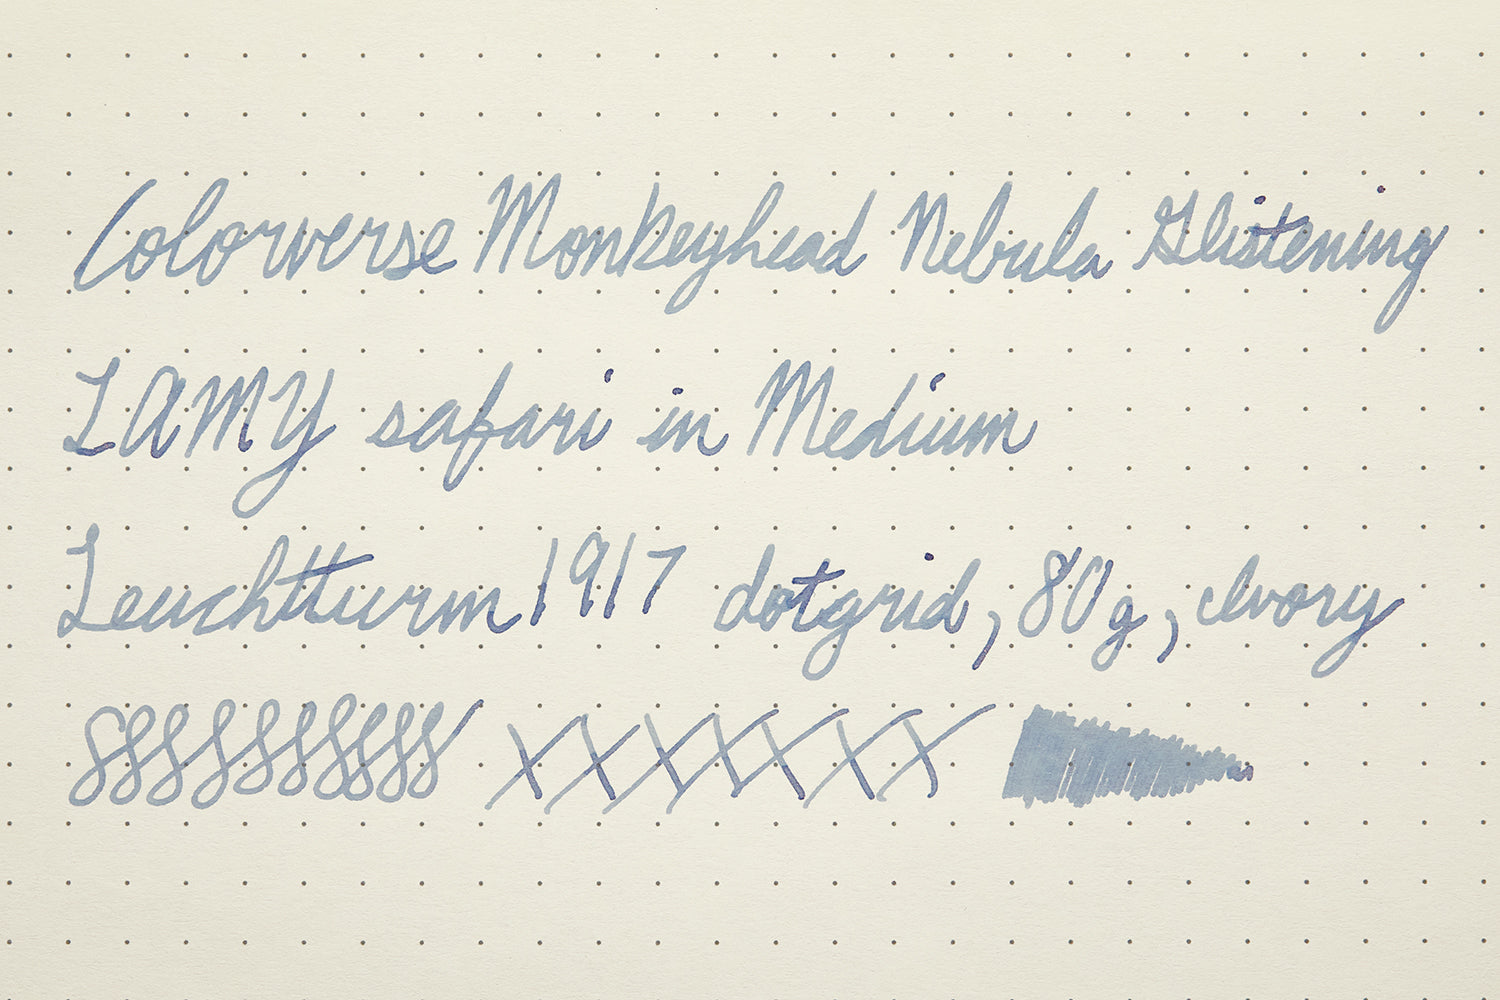 Colorverse Monkeyhead Nebula Glistening fountain pen ink bottle, writing sample on cream colored dot grid paper